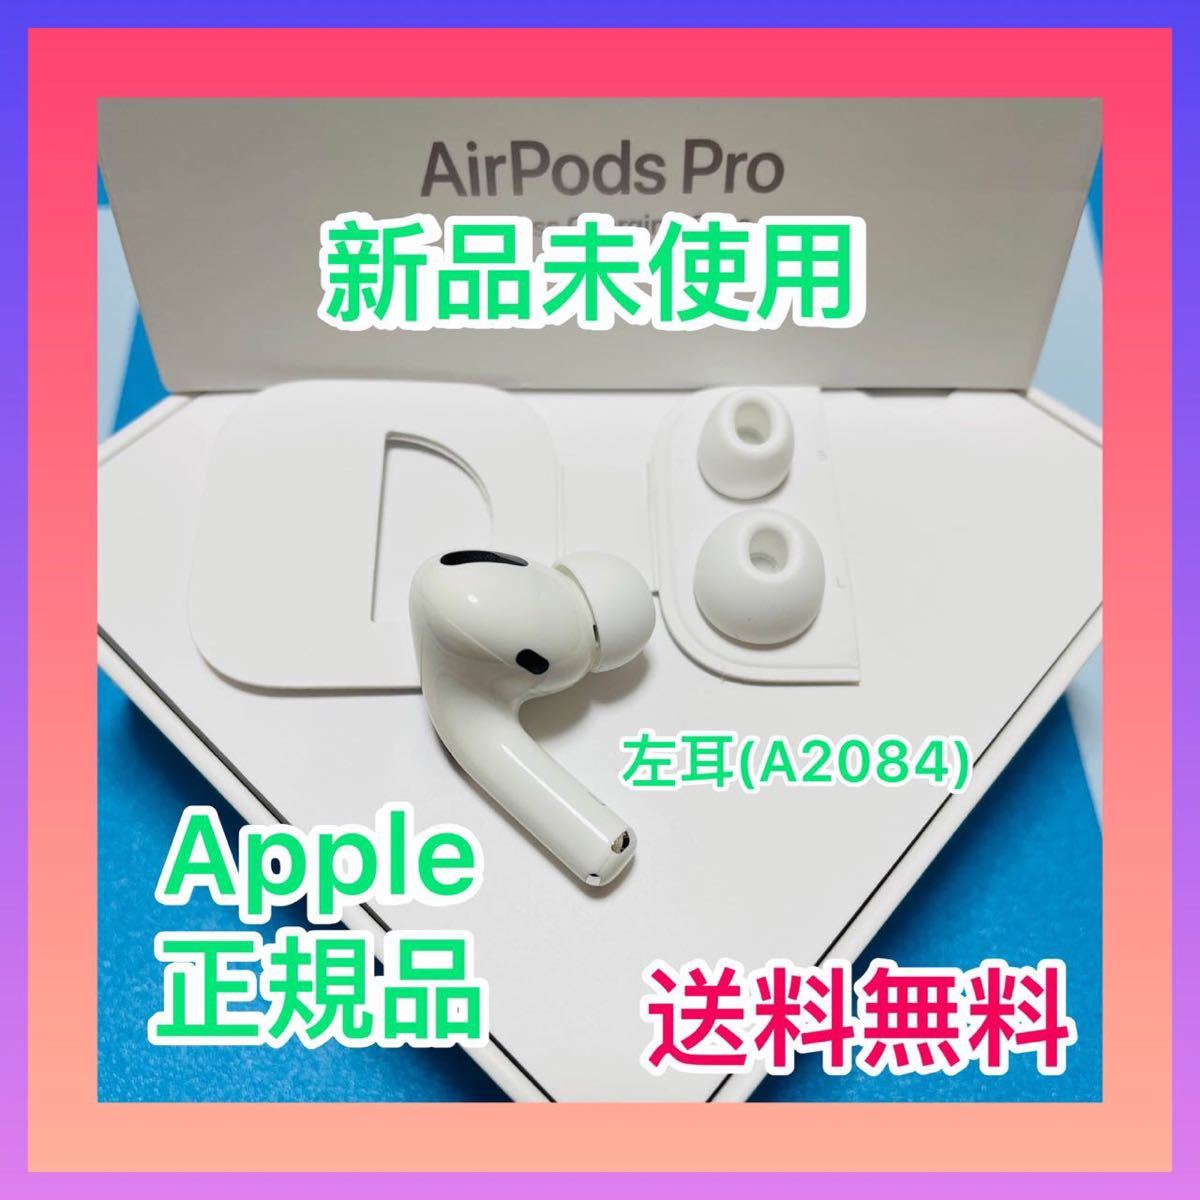 Apple AirPods Pro 左耳 L片耳 新品 正規品 エアーポッズプロ｜PayPay 